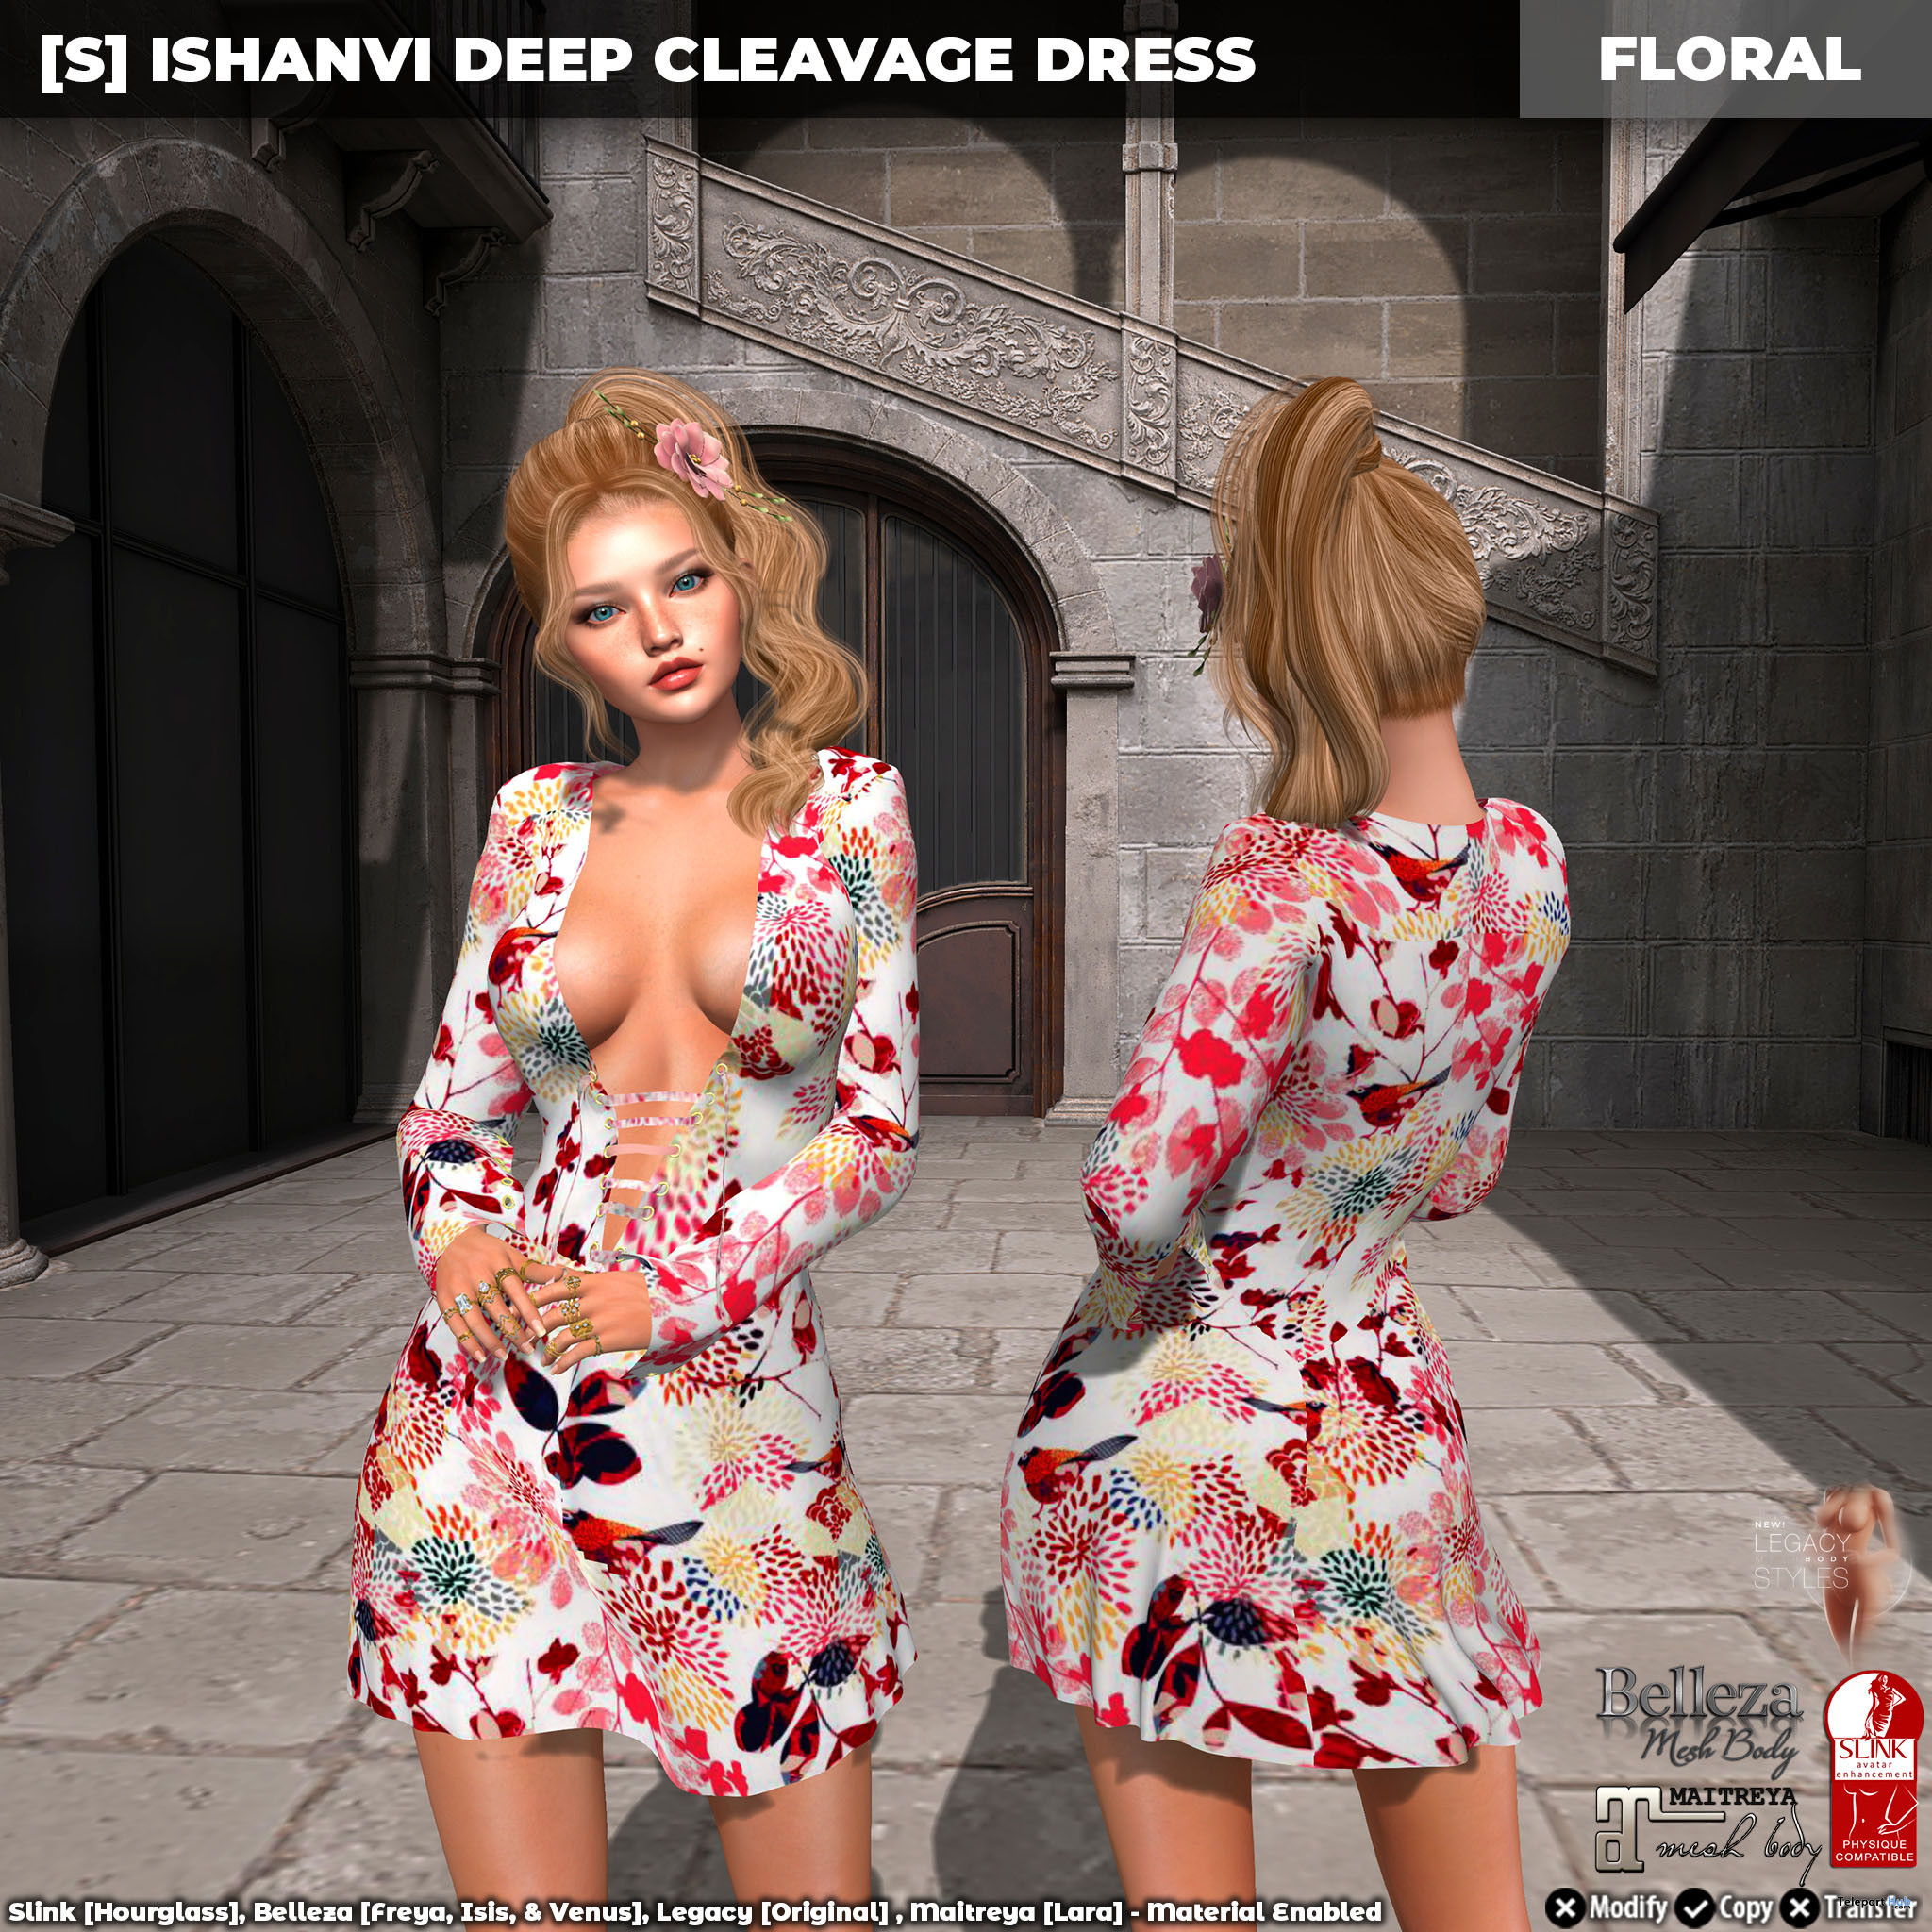 New Release: [S] Ishanvi Deep Cleavage Dress by [satus Inc